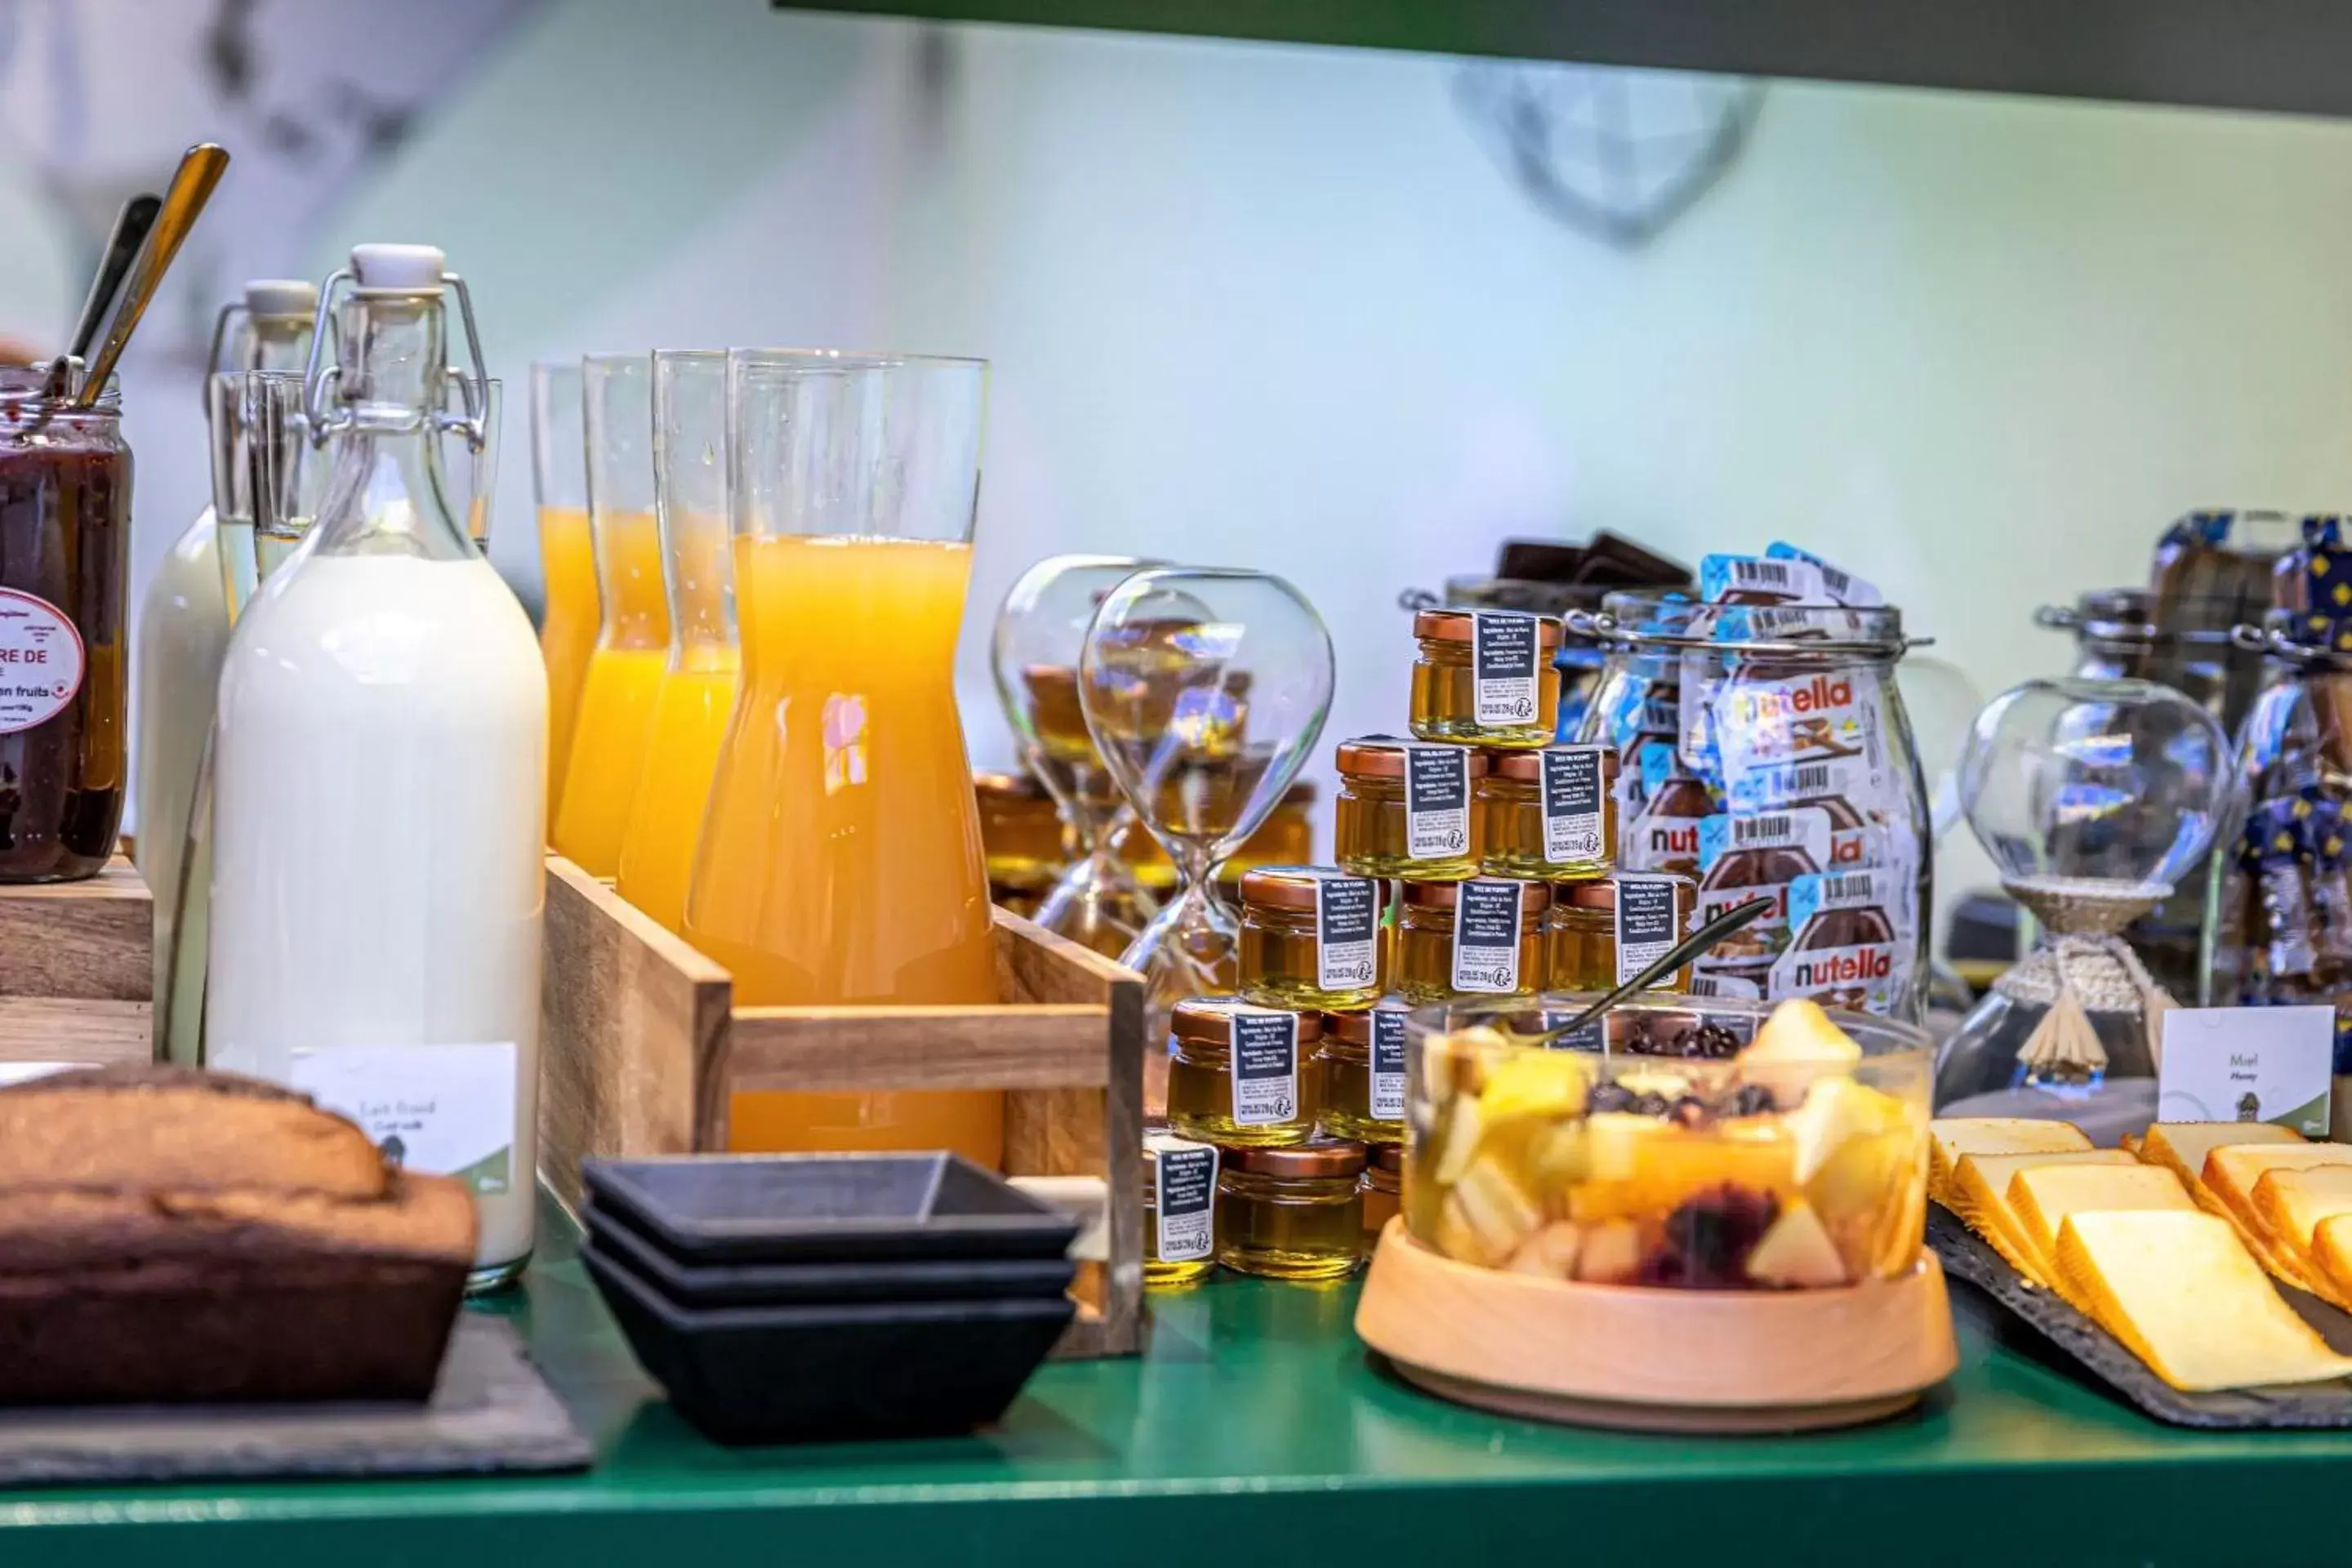 Buffet breakfast in Hotel Ariane Montparnasse by Patrick Hayat